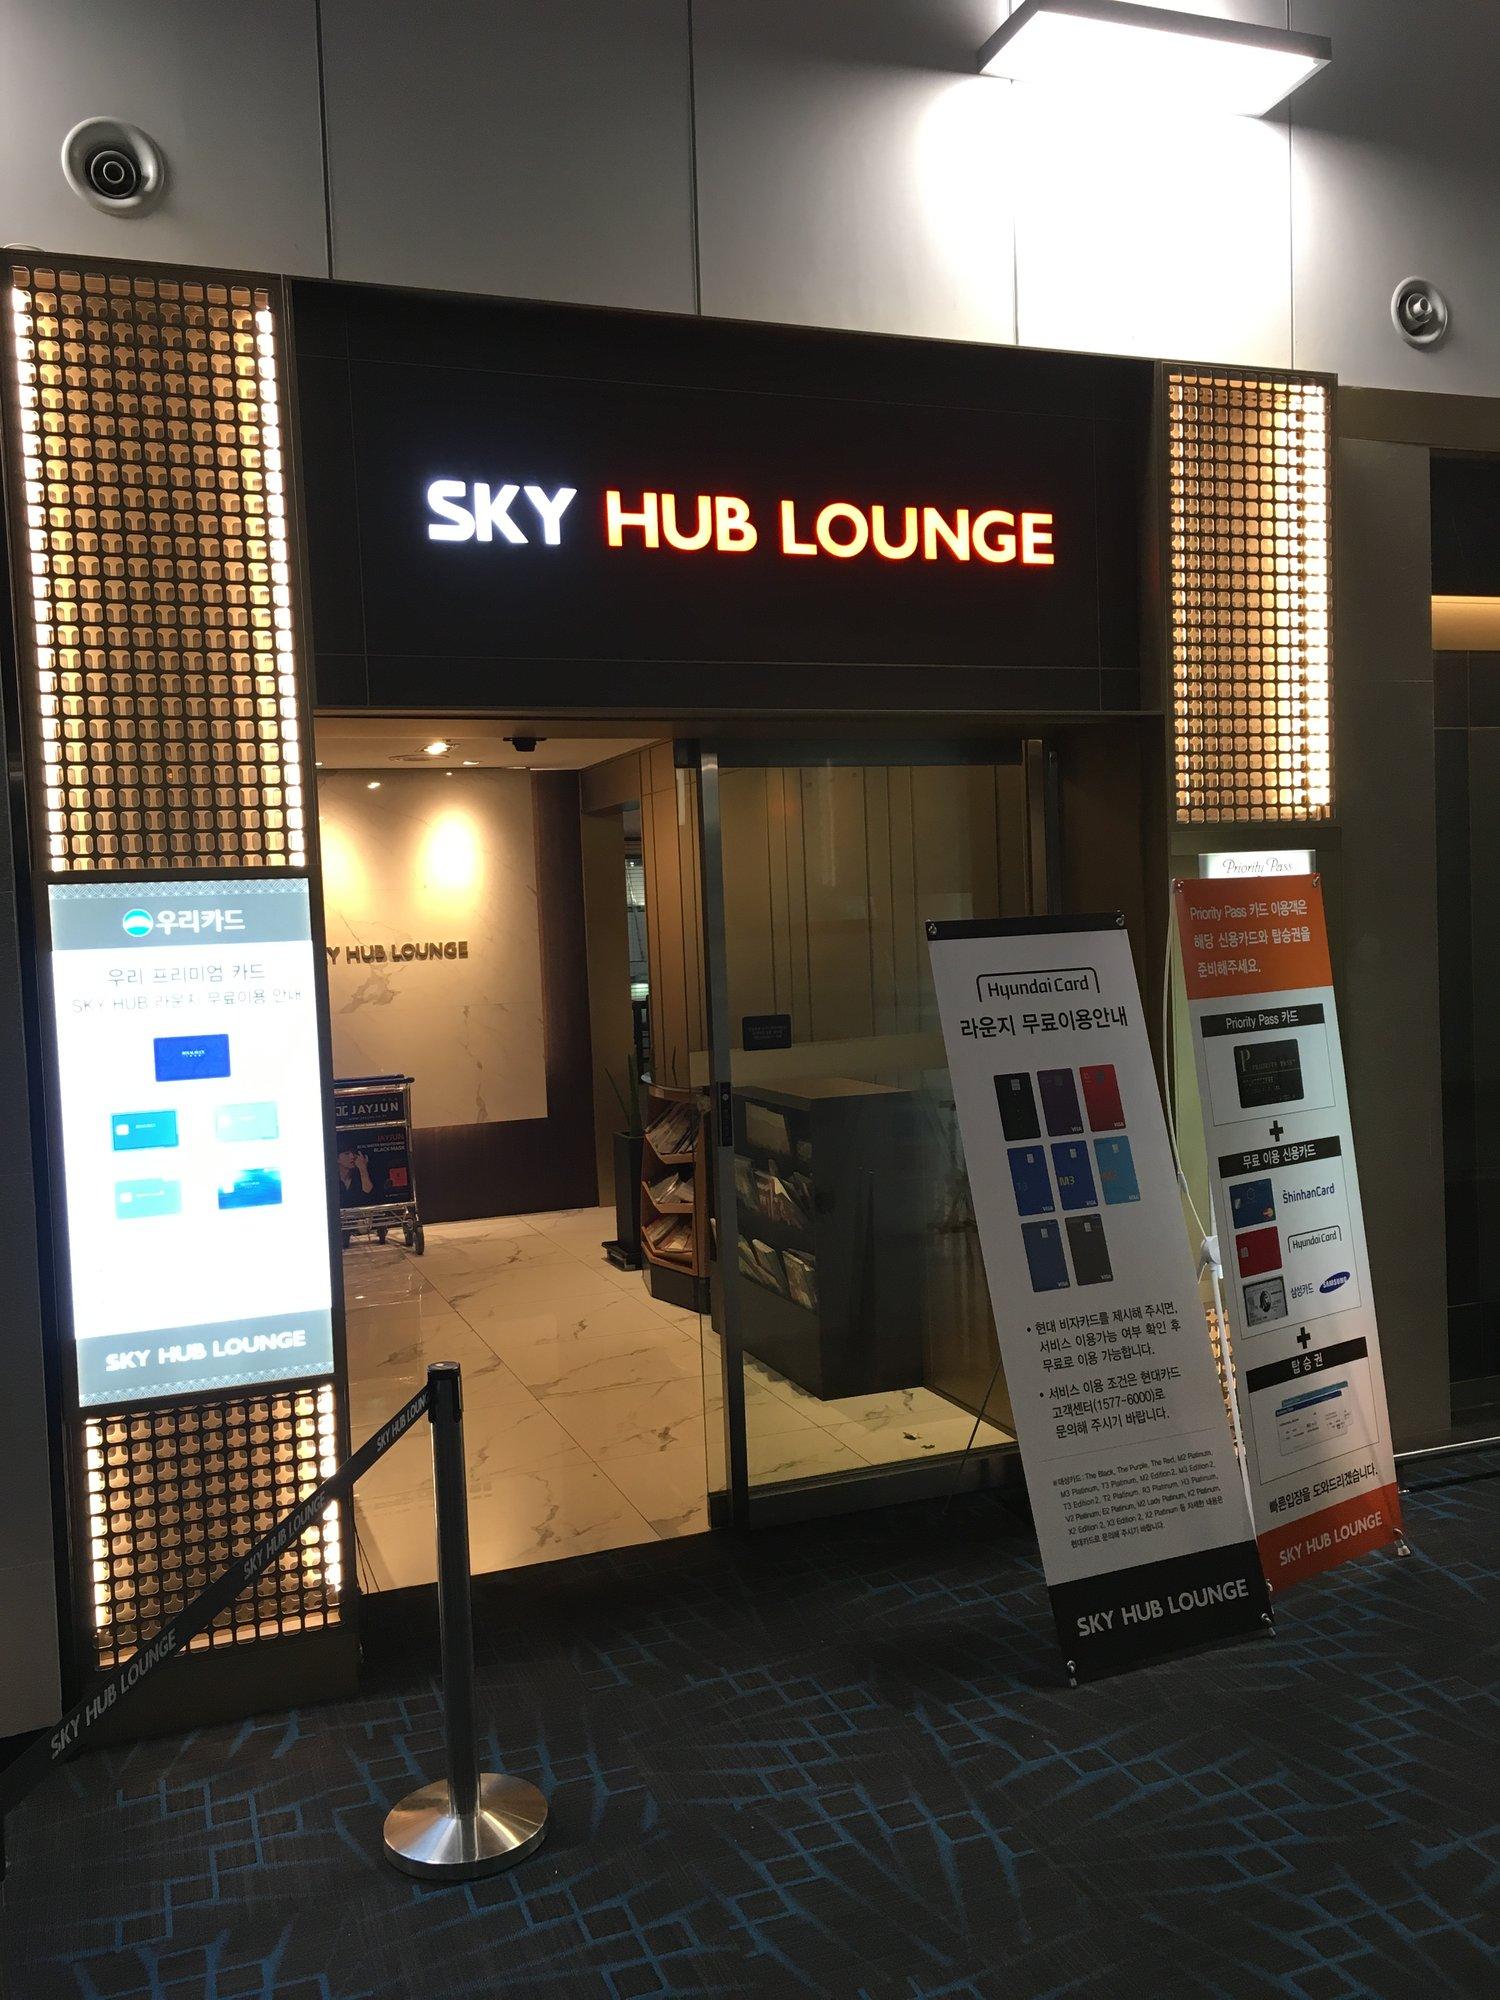 Sky Hub Lounge West image 18 of 30